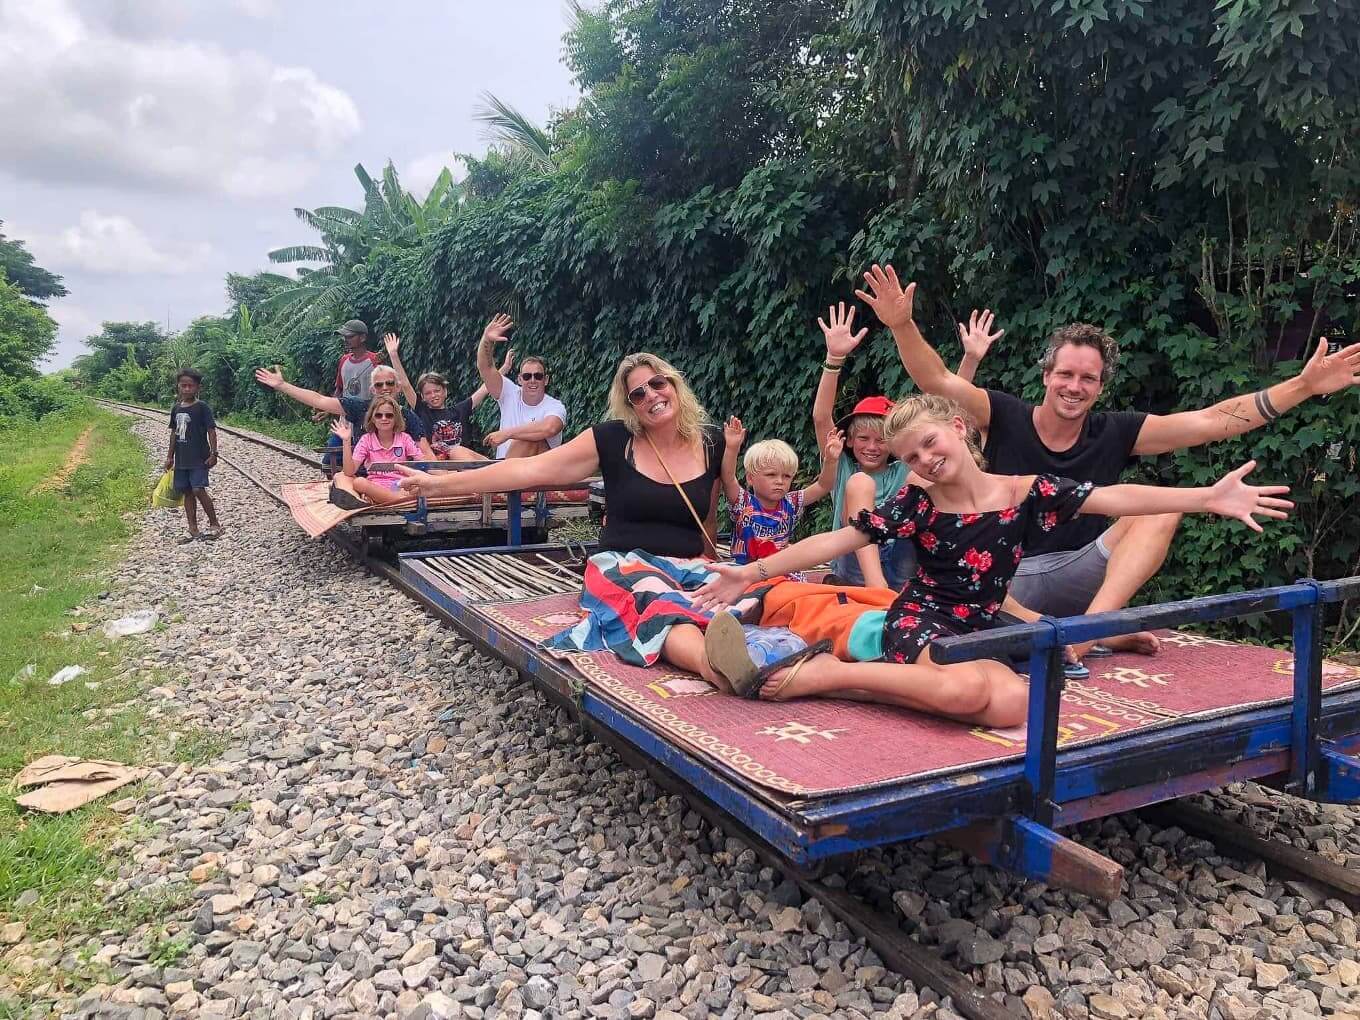 cambodia-itinerary-8-days-battambang-bamboo-train-2-jpeg